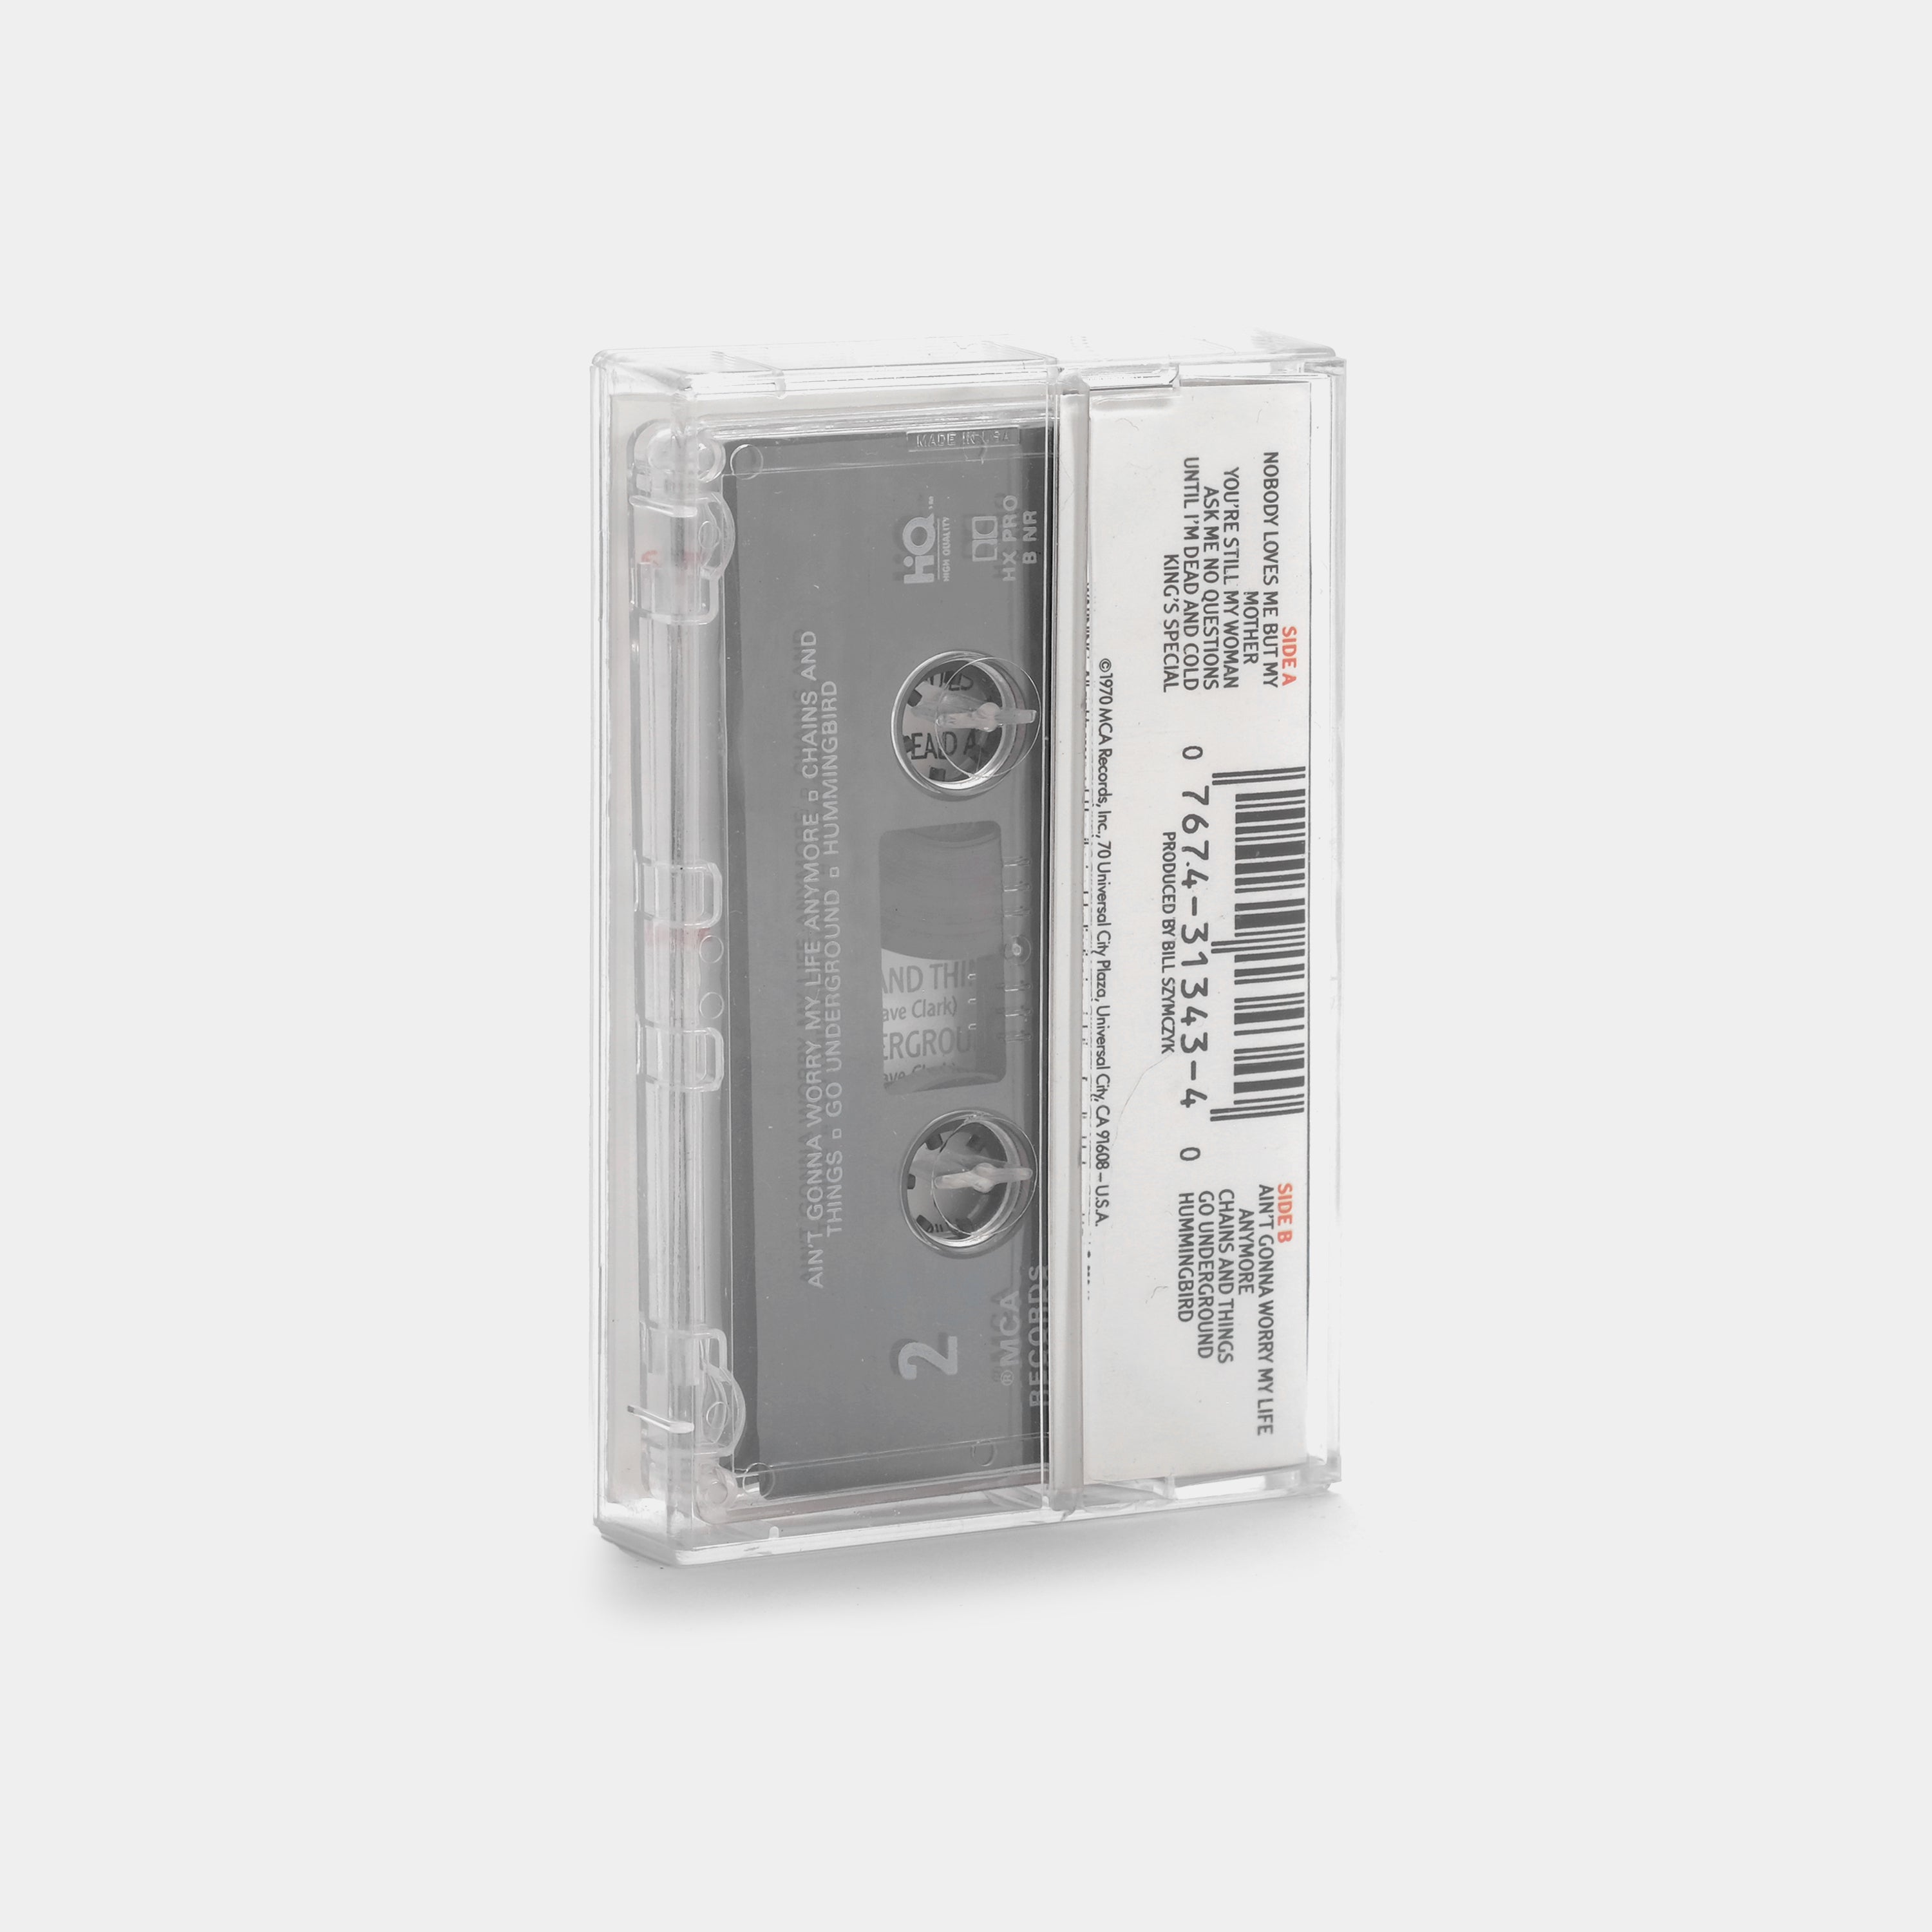 B.B. King - Indianola Mississippi Seeds Cassette Tape